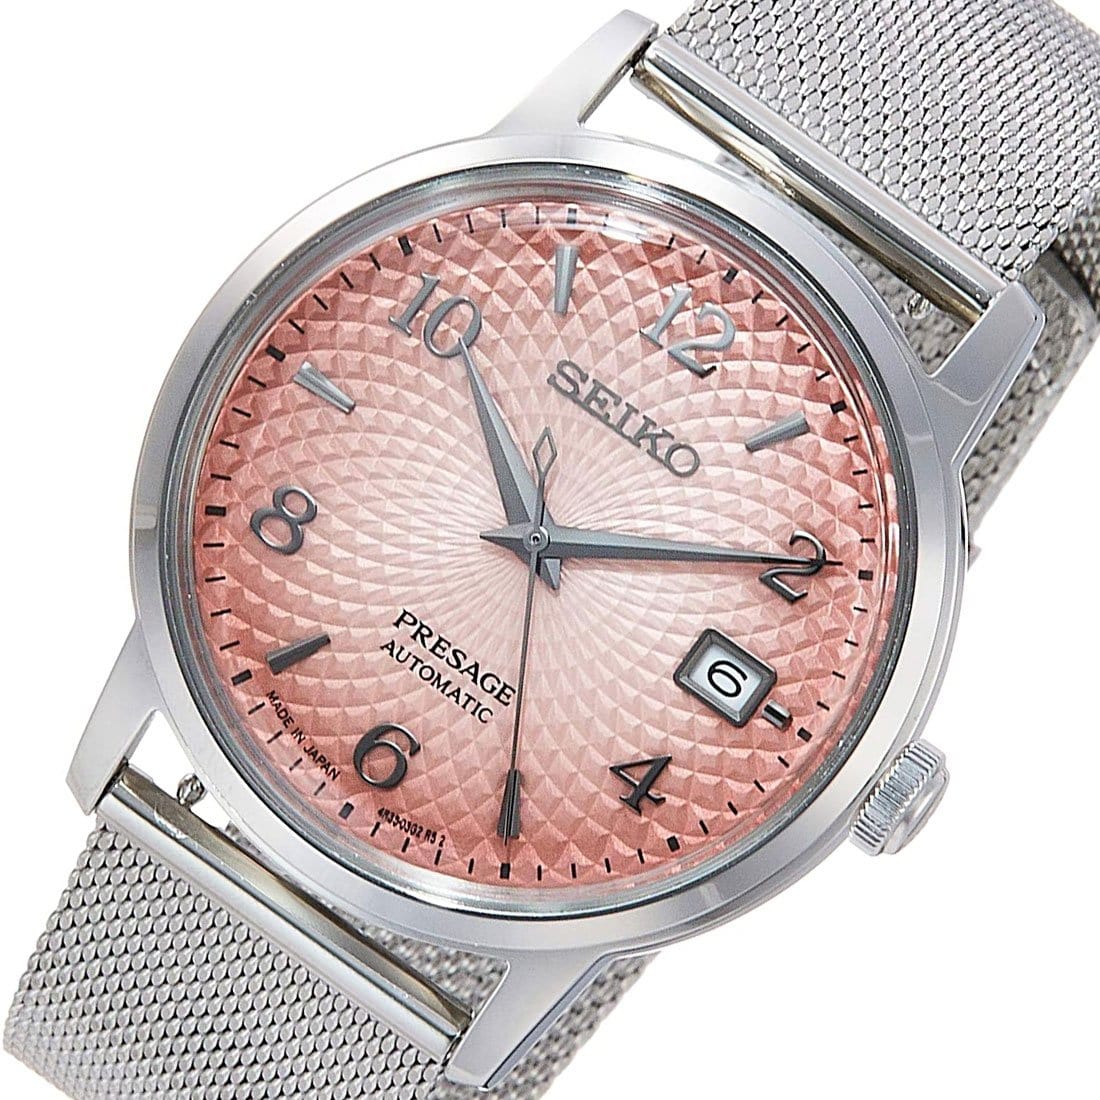 Seiko Presage Limited Edition SARY169 – Watchkeeper